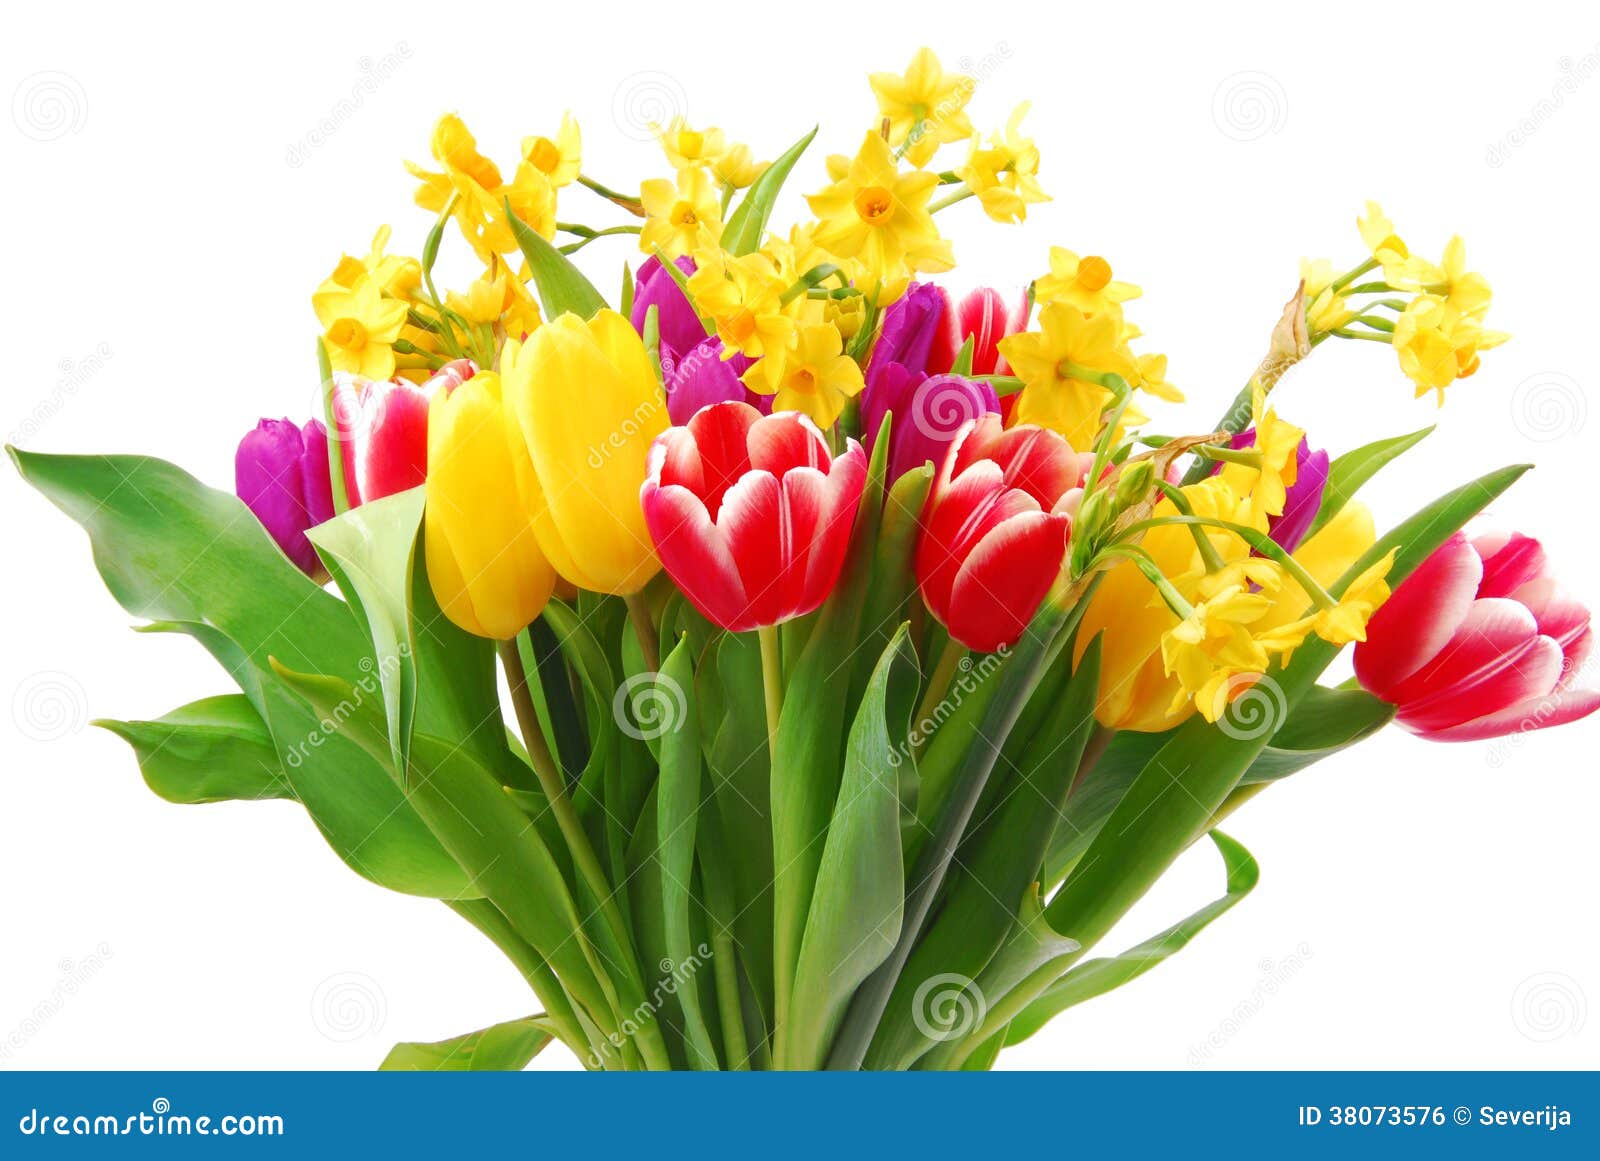 Tulipe et jonquille photo stock. Image du tony, jardin - 38073576